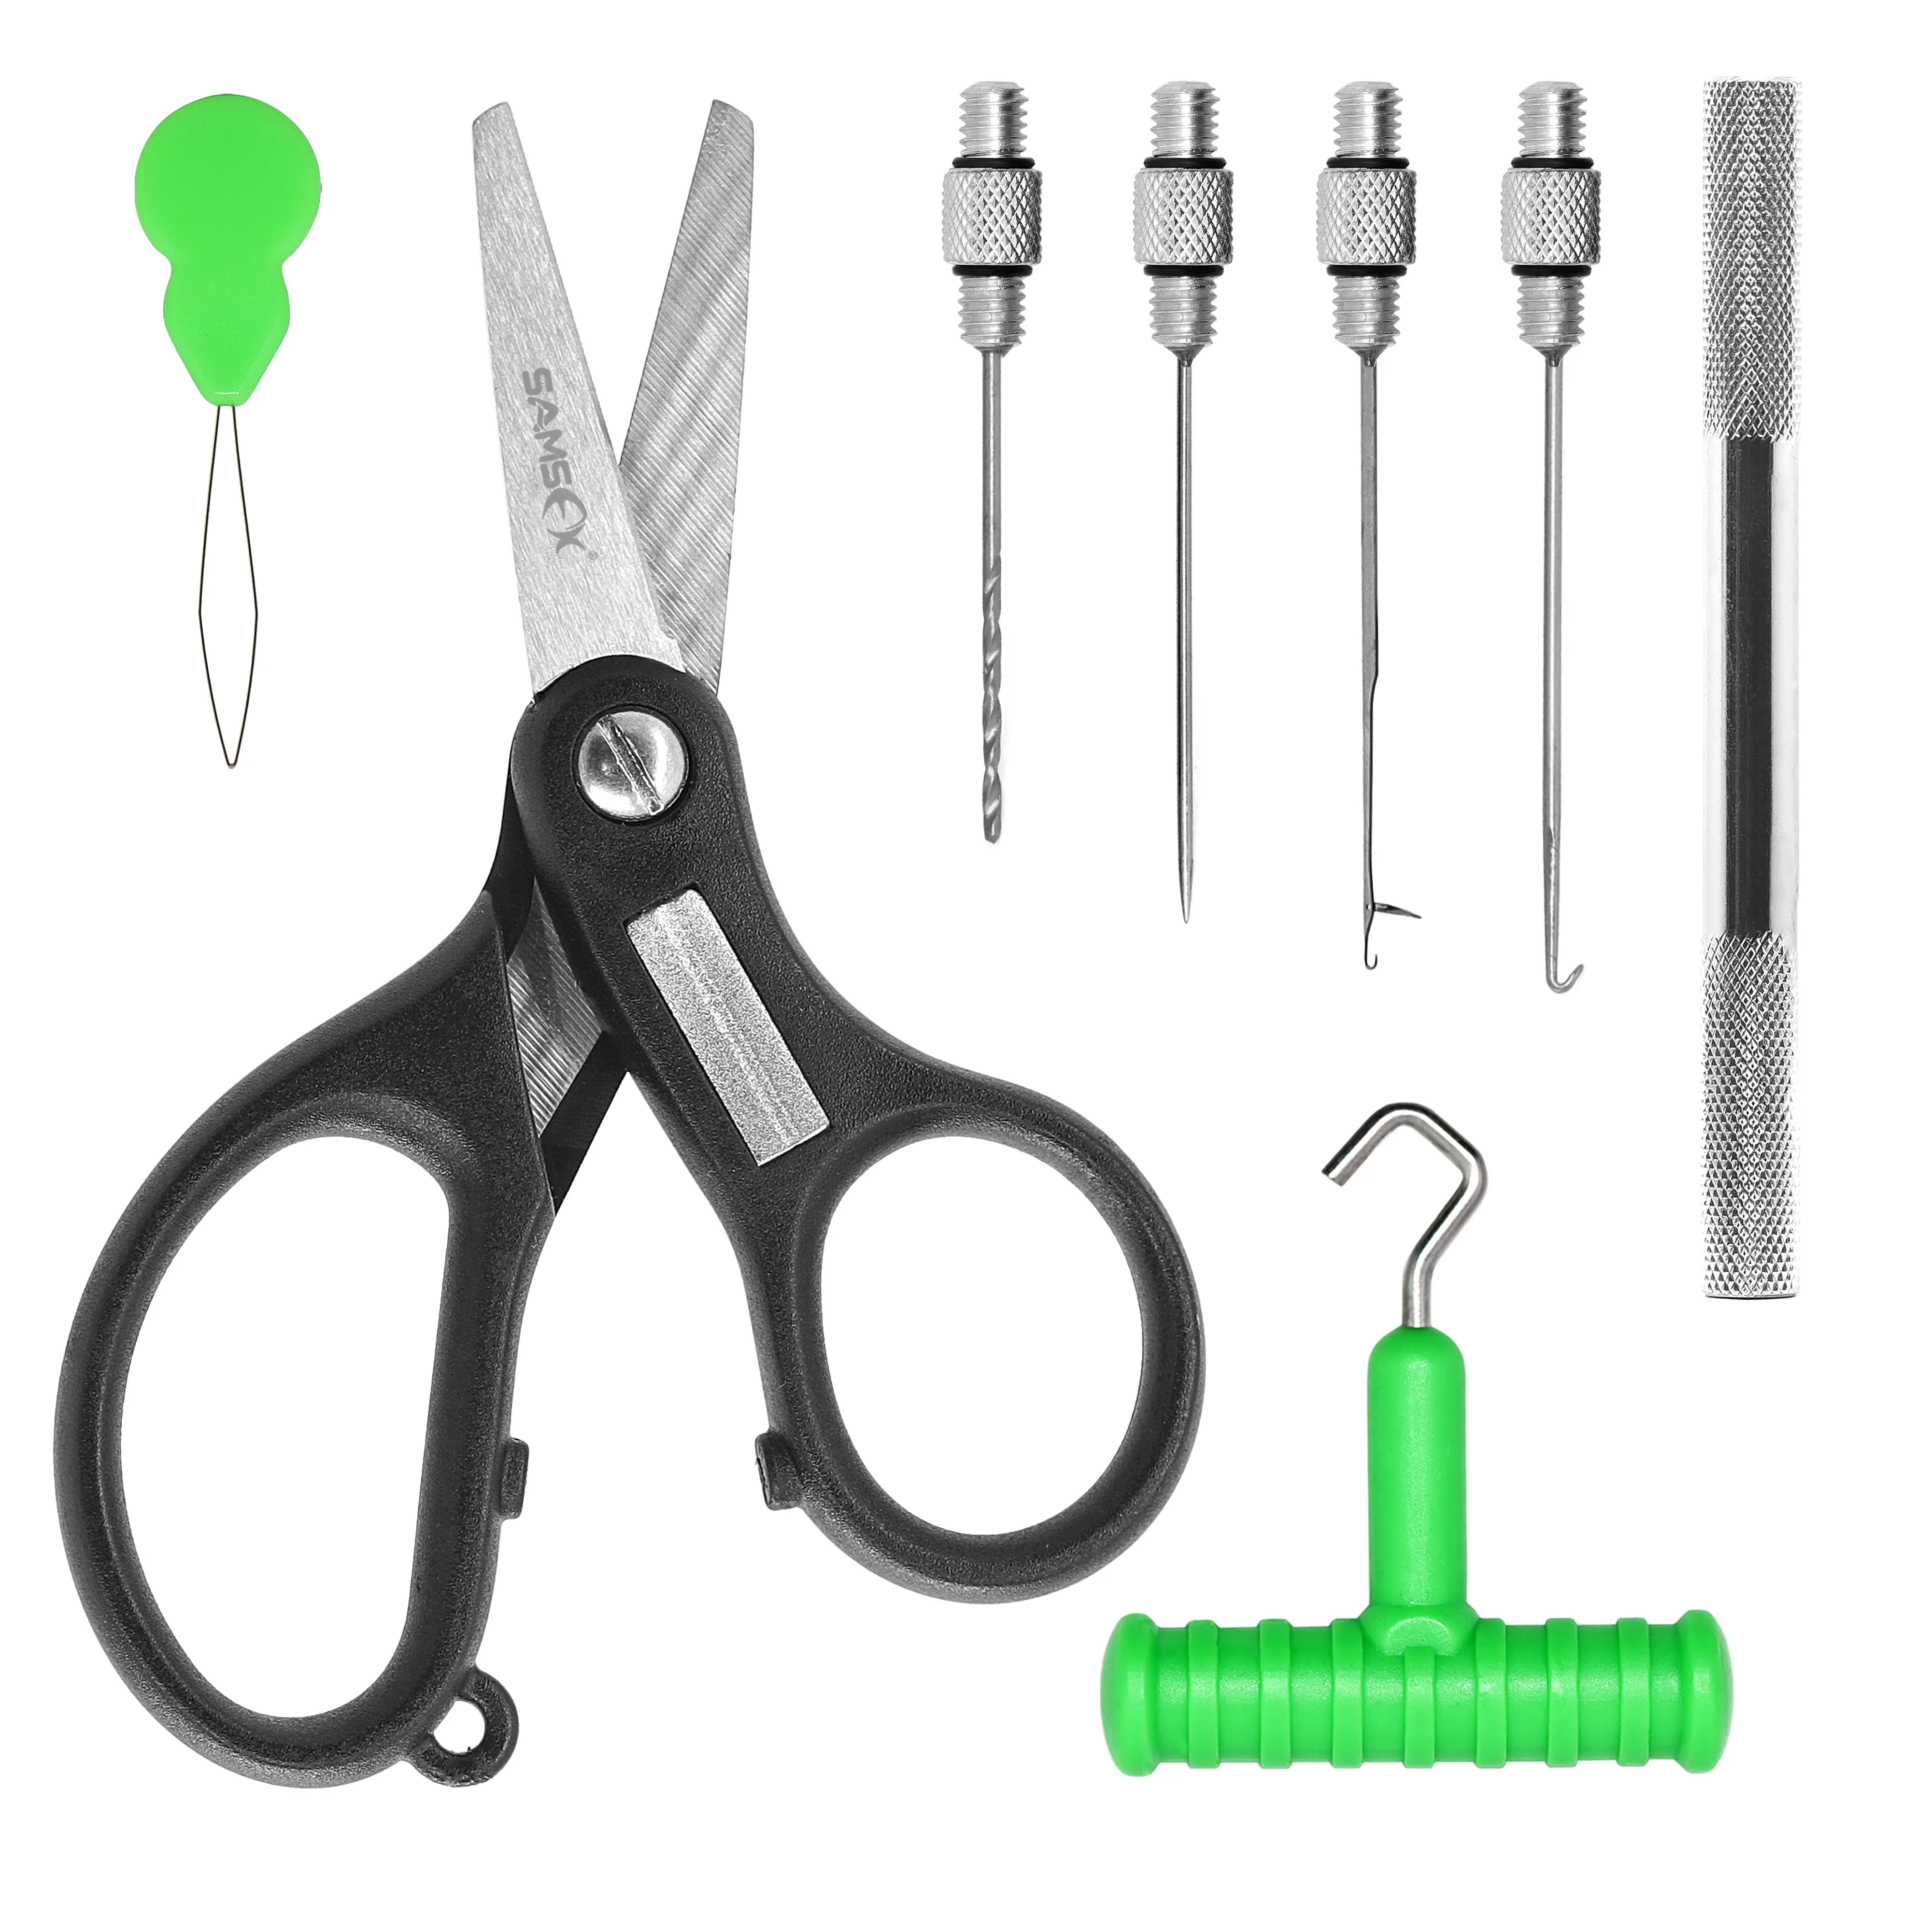 SAMSFX Carp Fishing Bait Hair Rigs Tool with Scissors Kit Combo Carp Fishing Tackle Baiting Needle